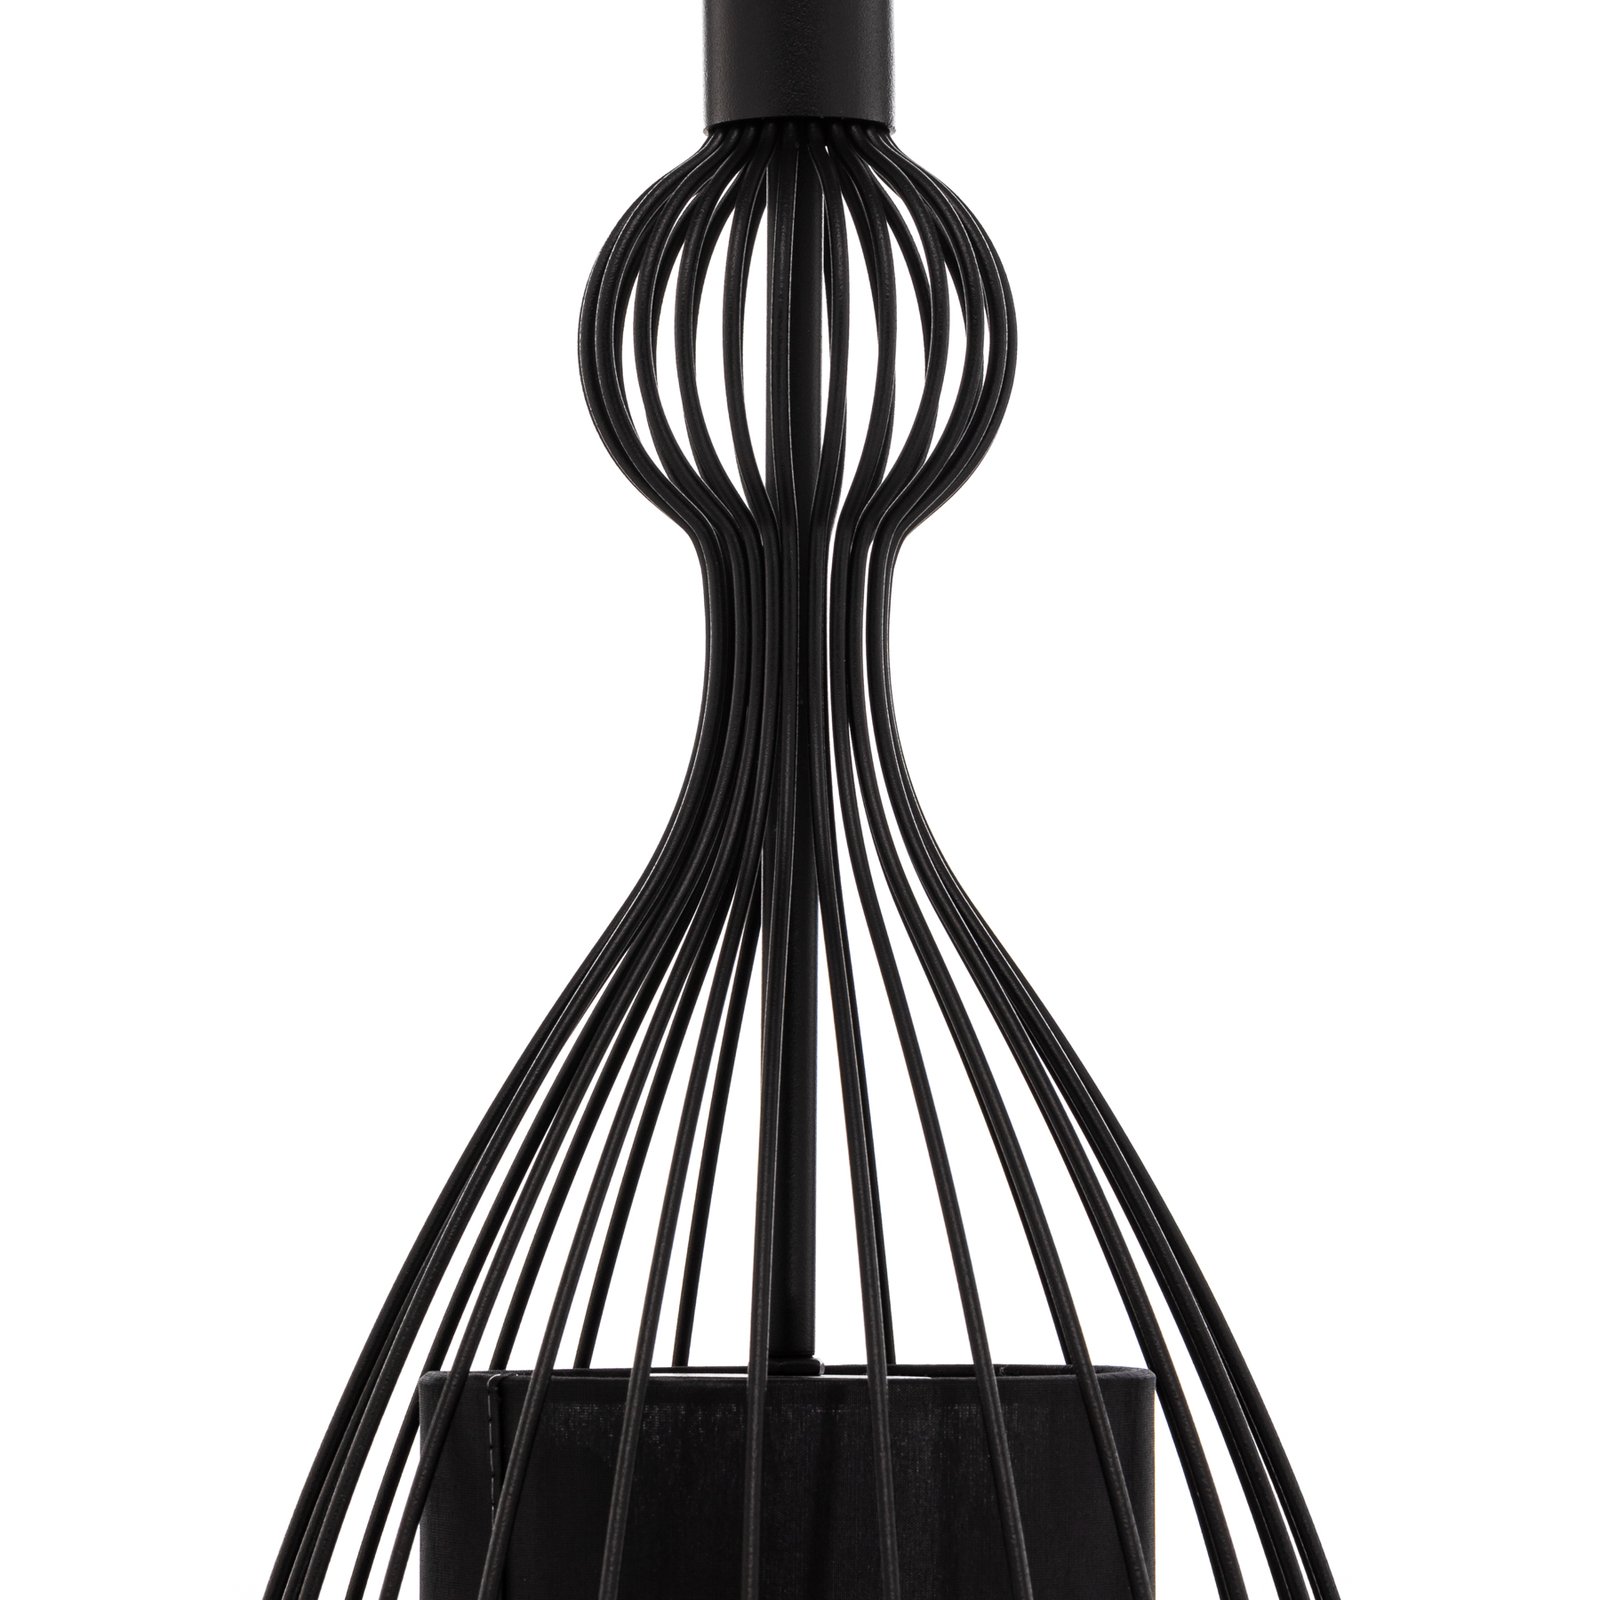 Hanglamp Abi L in lange vorm, zwart